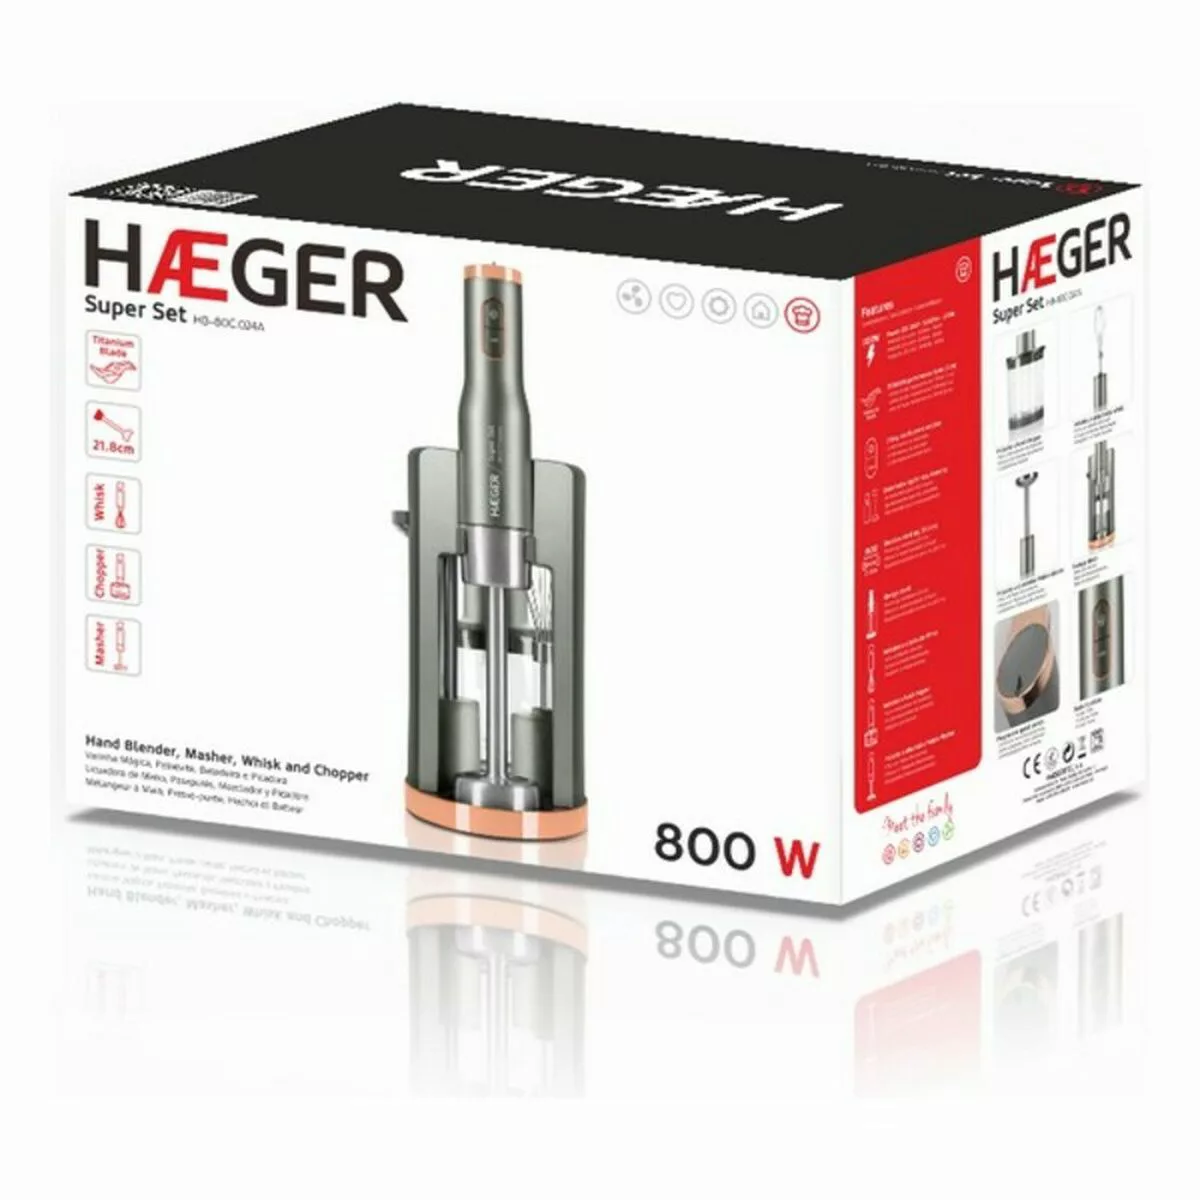 Handrührgerät Haeger Super Set Grau 800 W günstig online kaufen